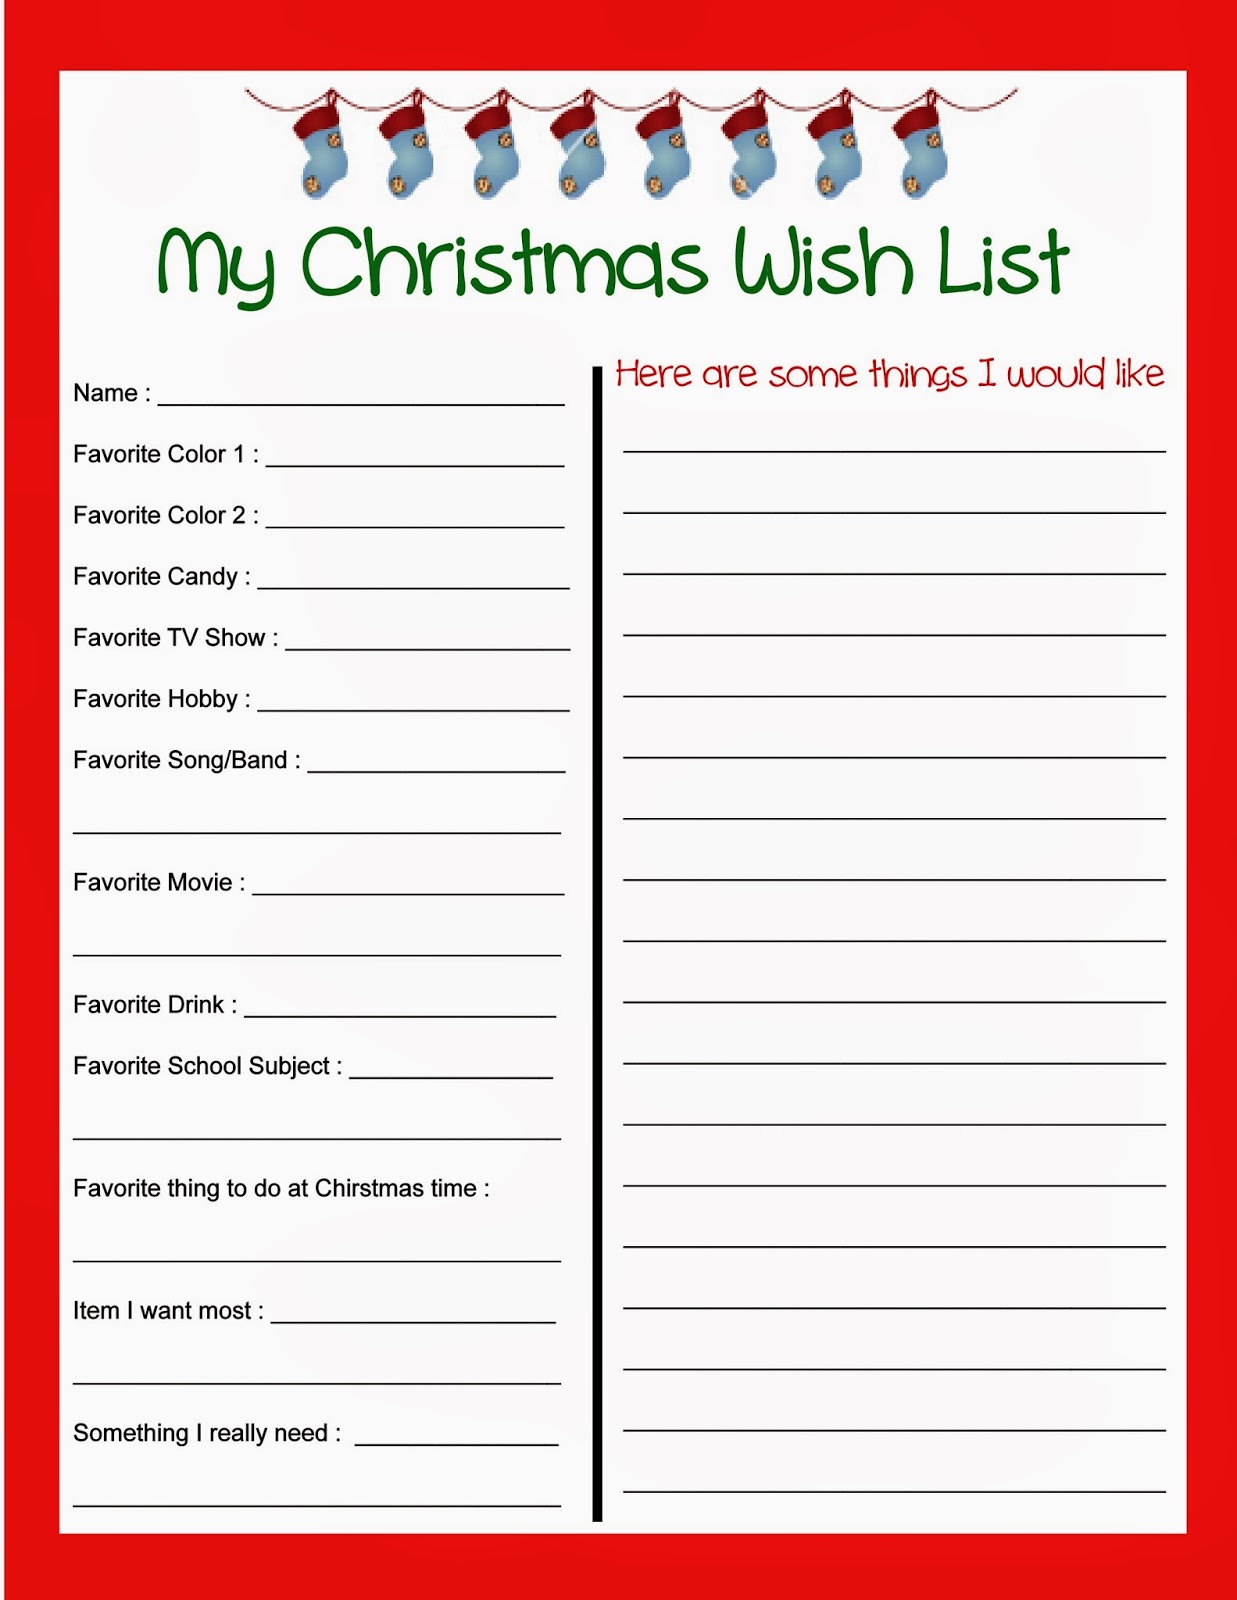 secret-santa-wish-list-questions-search-results-calendar-2015